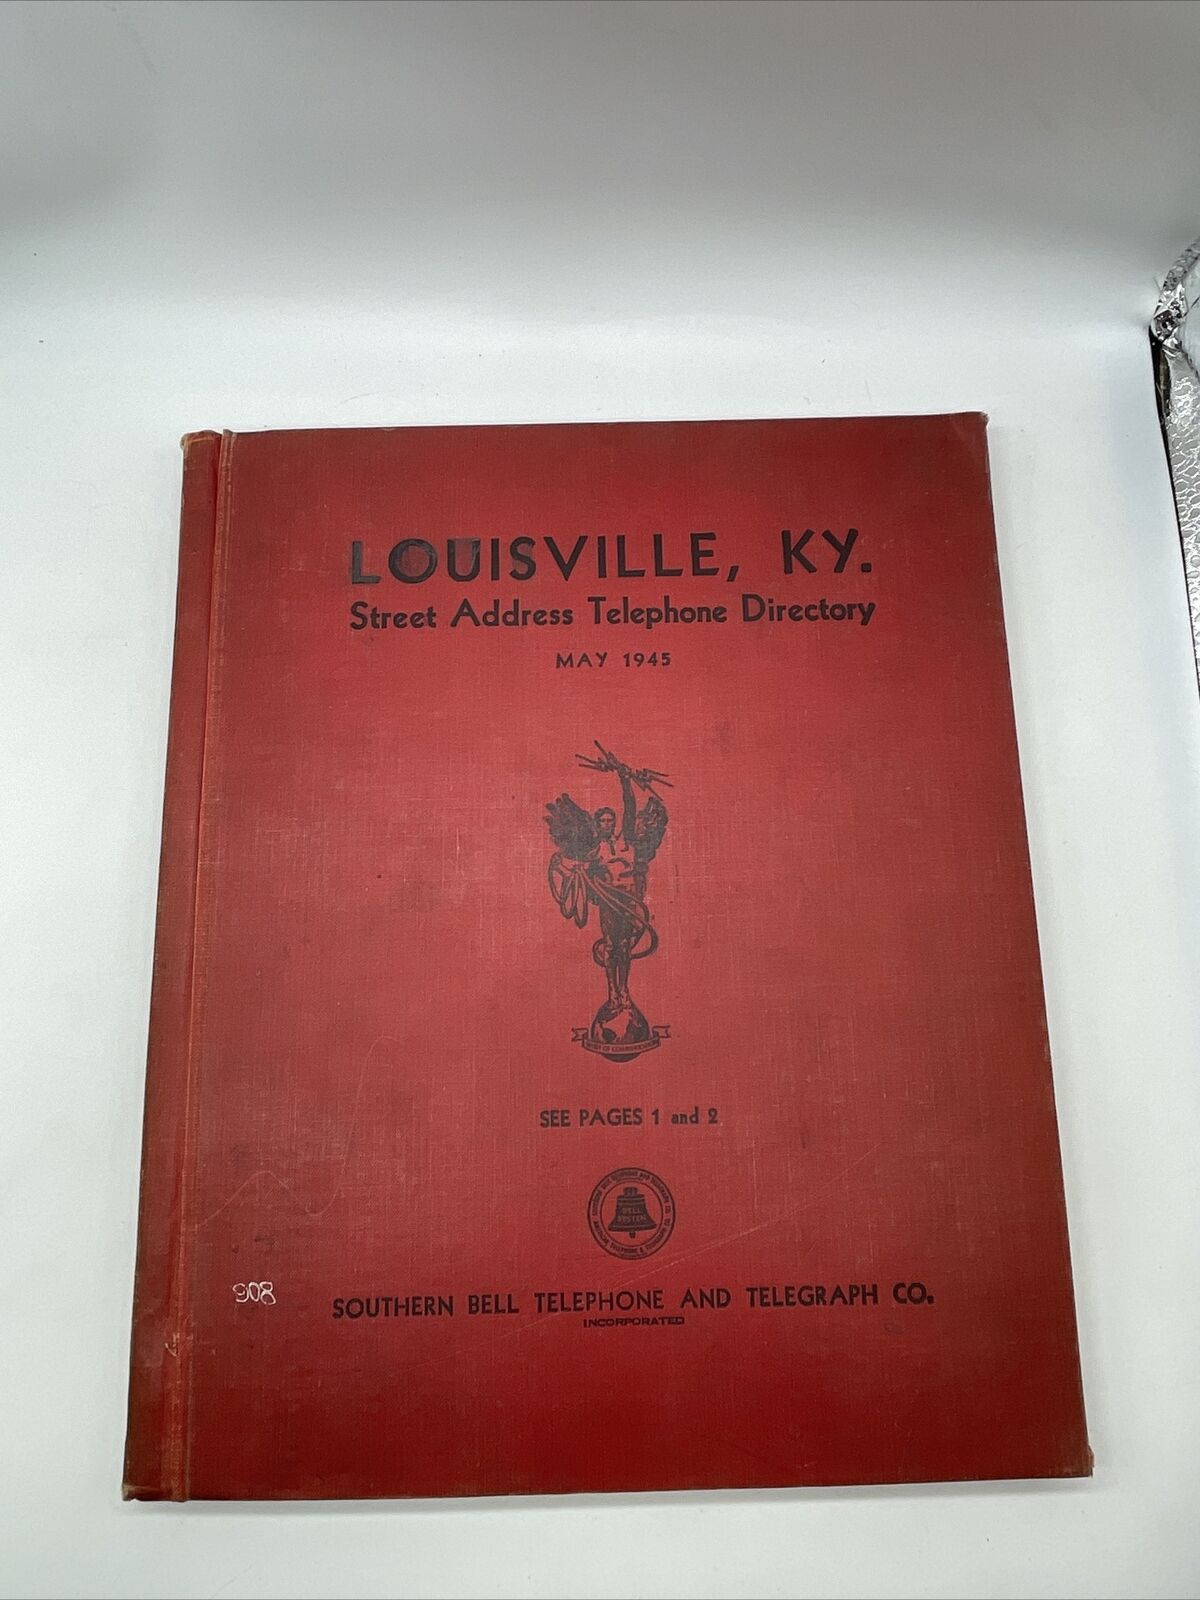 1945 May Louisville, Kentucky Street Address Telephone Directory